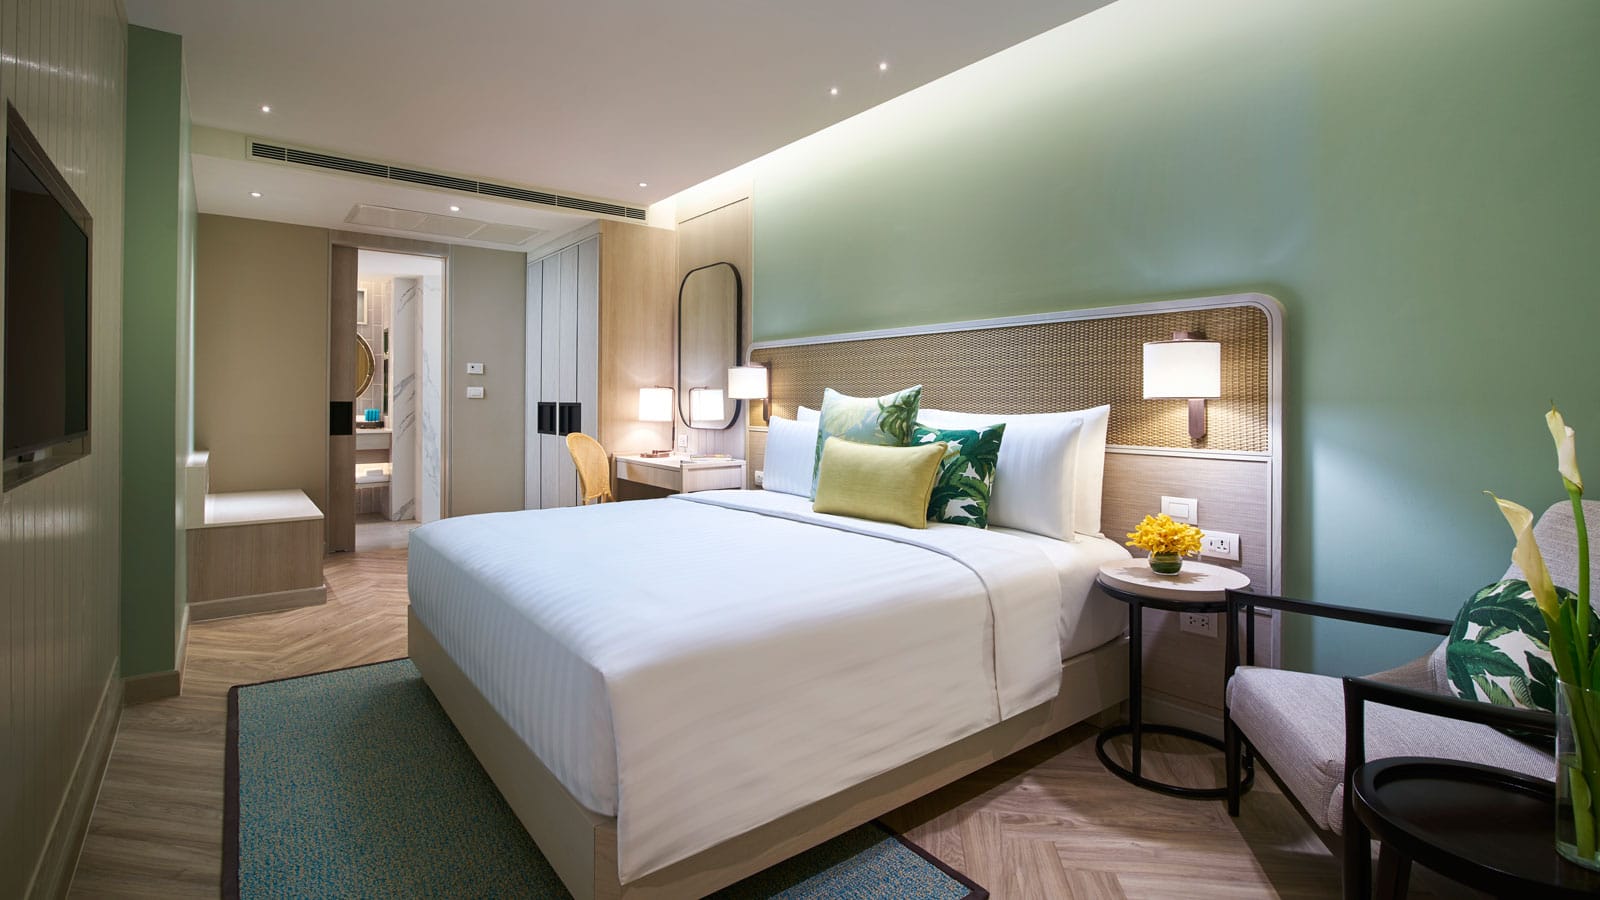 King bed in master bedroom in Amari Suite Poolside - Amari Pattaya